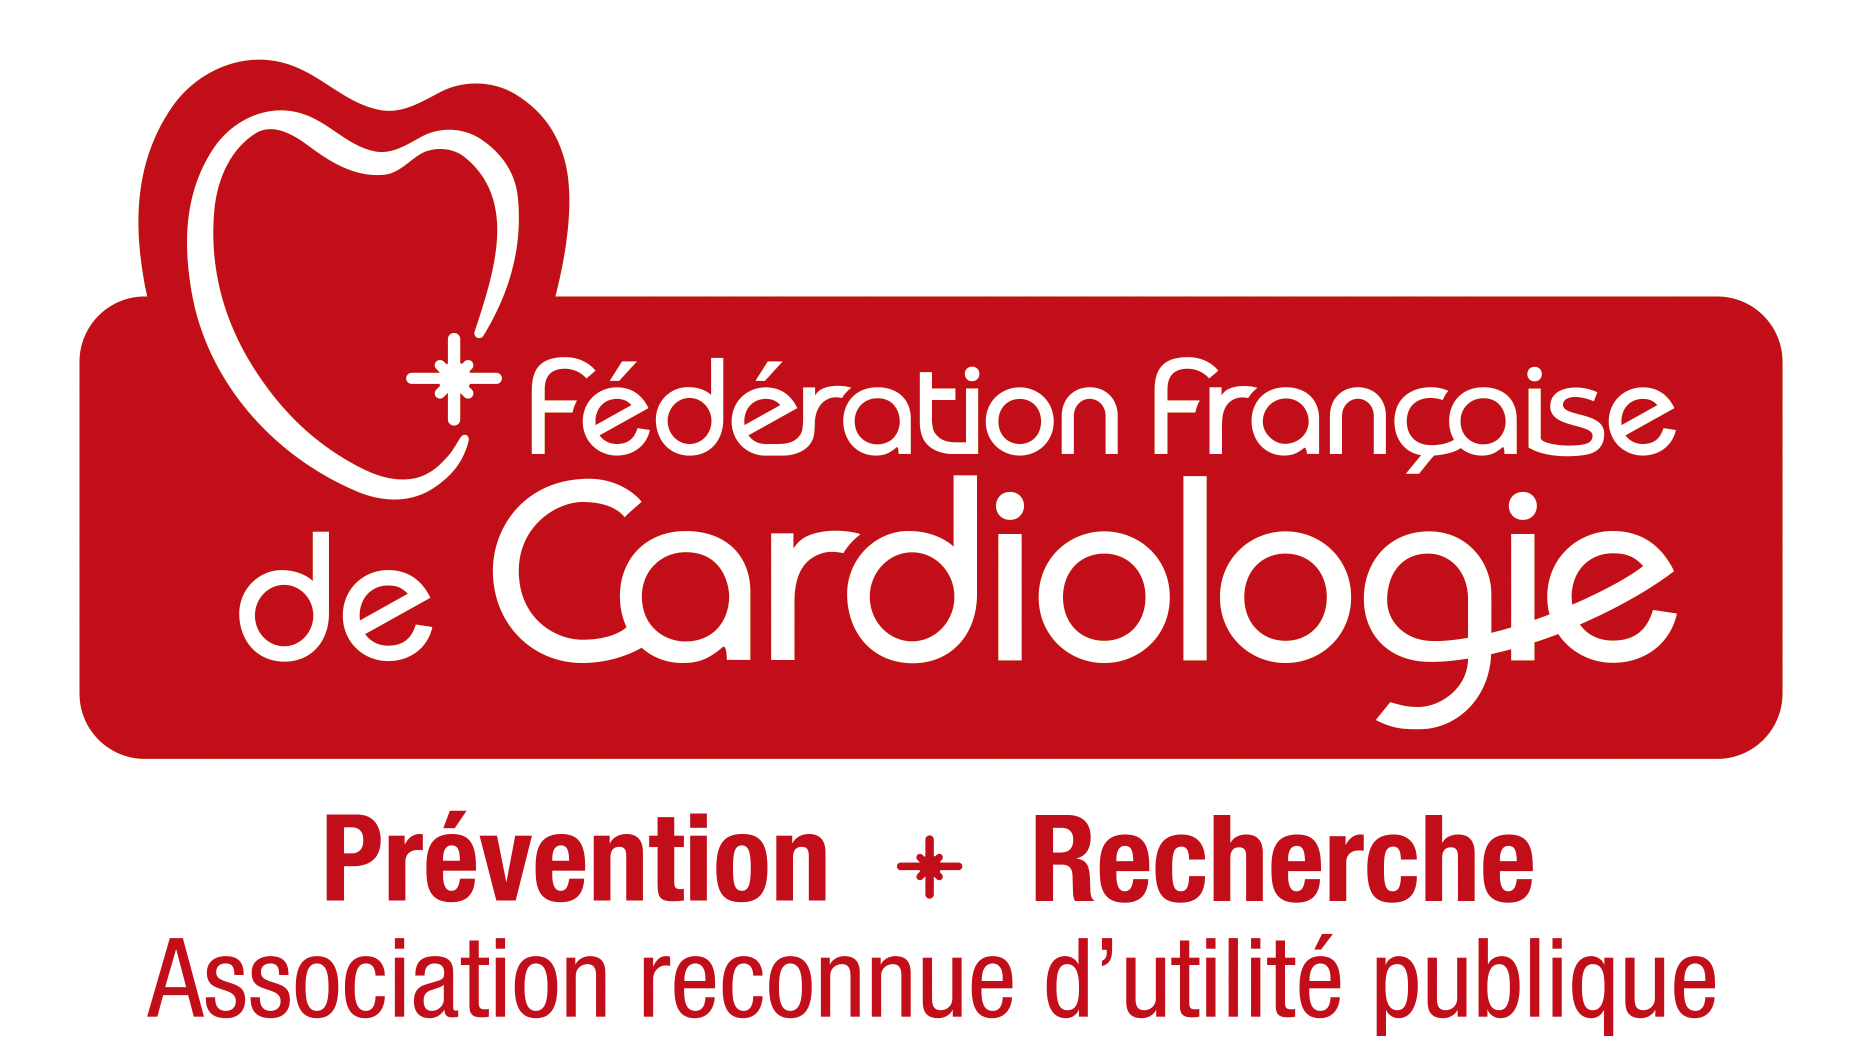 Fédération Française cardiologie